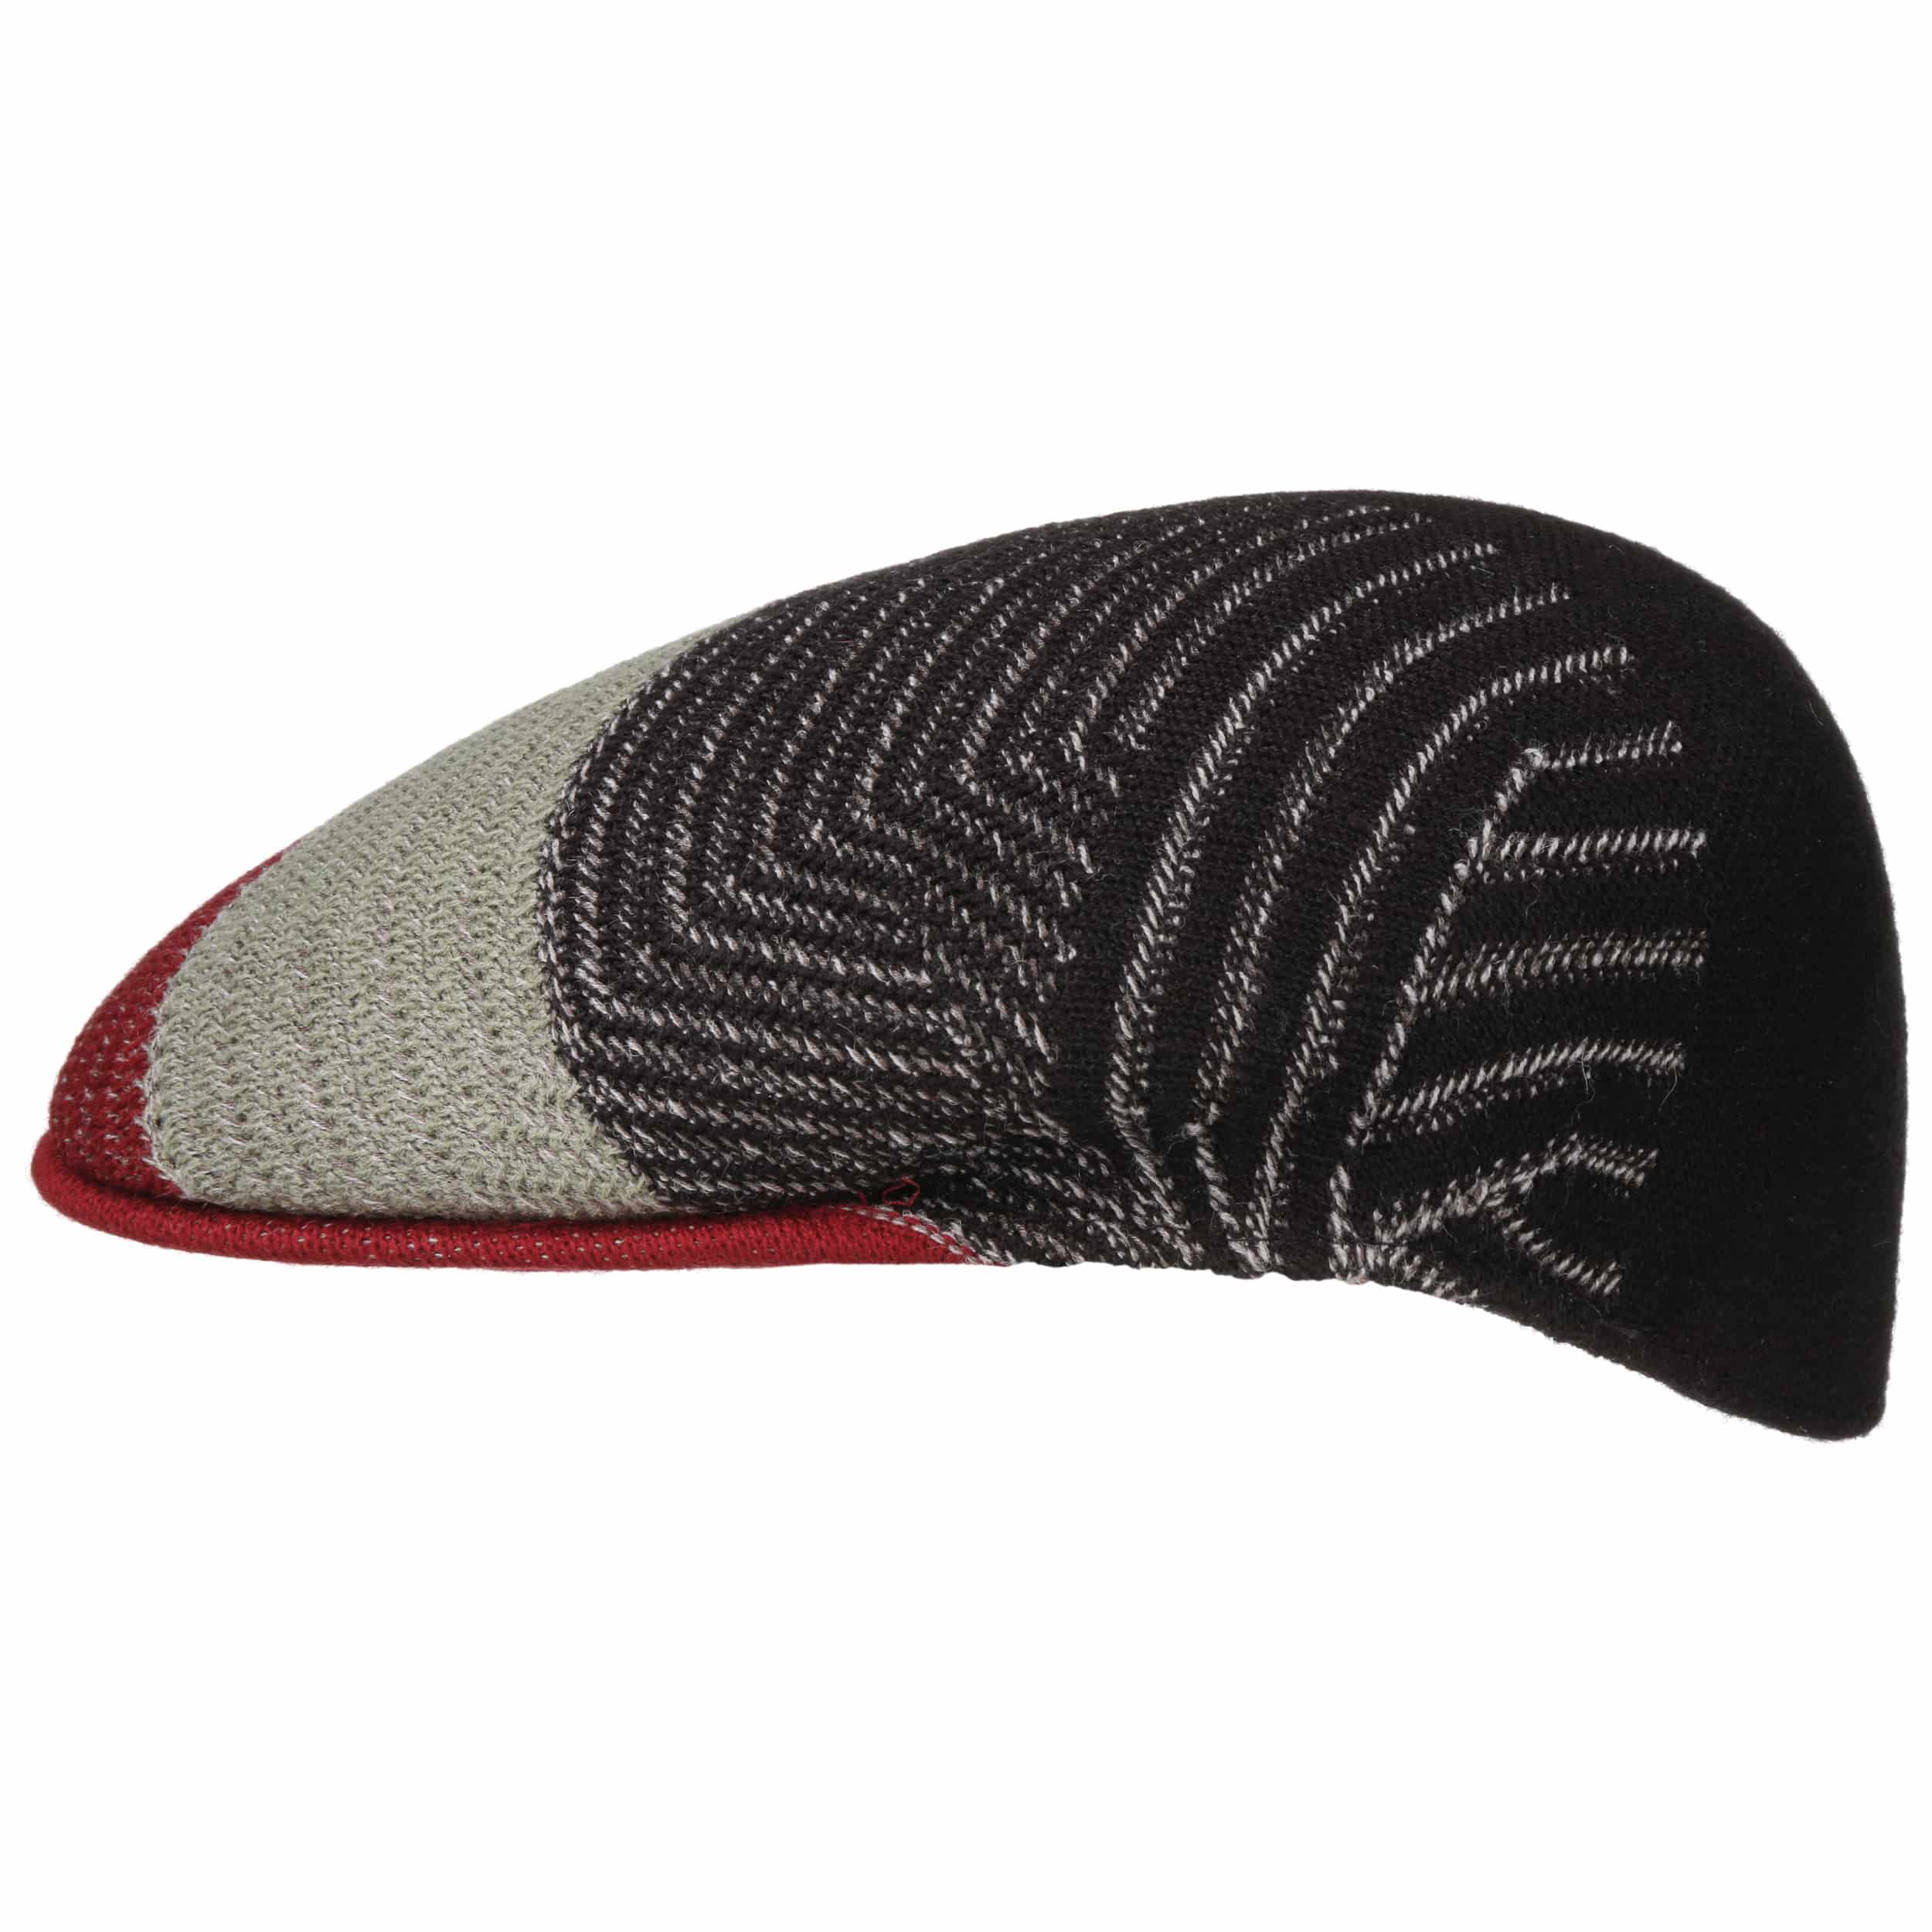 Stripe 507 Kangol Wool Flat Cap, 55% OFF